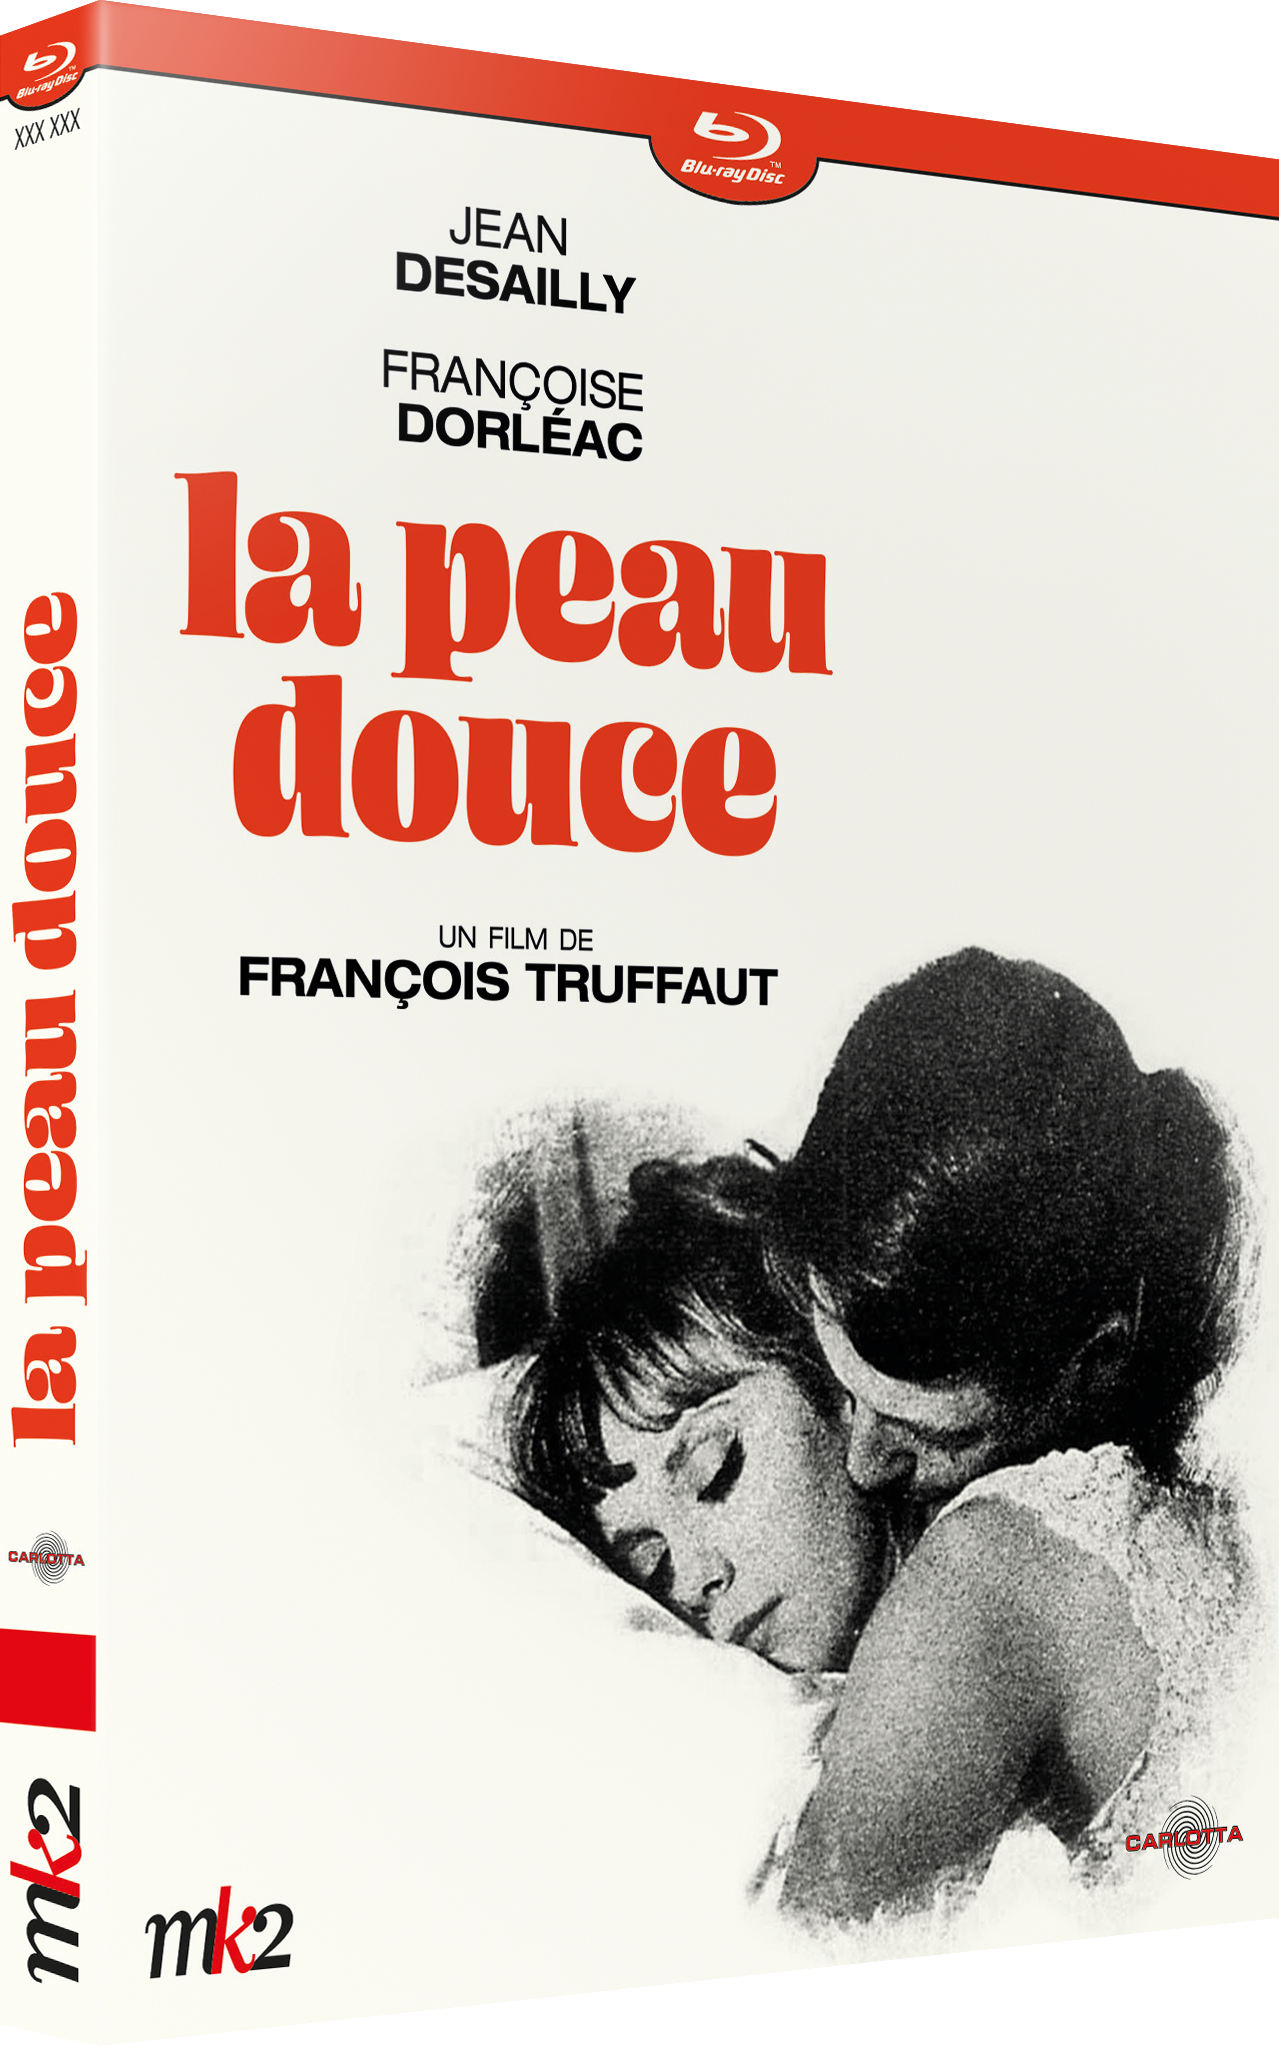 La Peau douce de François Truffaut